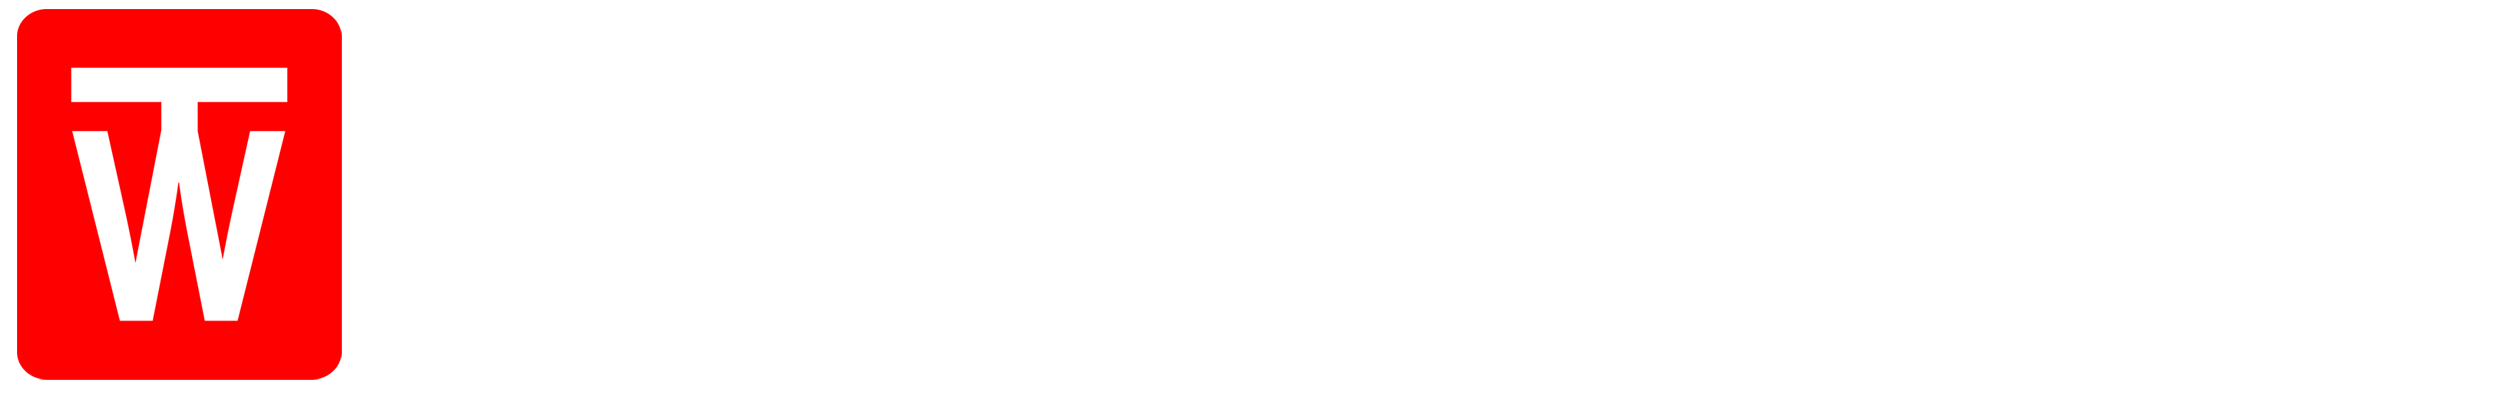 TONEWOODAMP logo